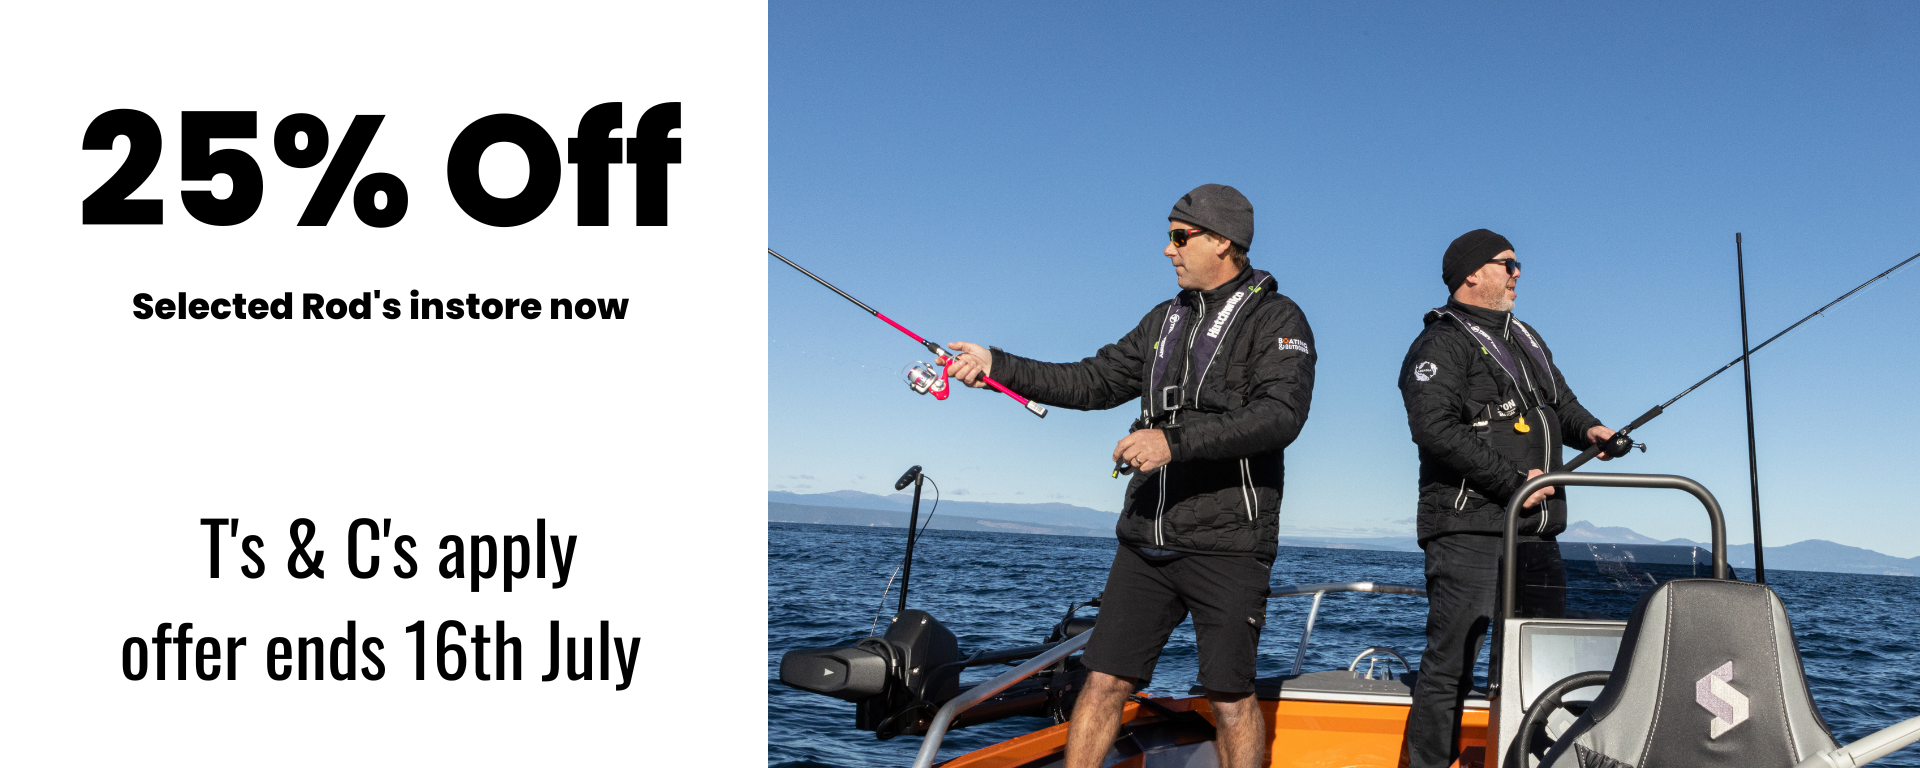 Fishing rod's on sale - Trev Terry Marine Lake Taupo